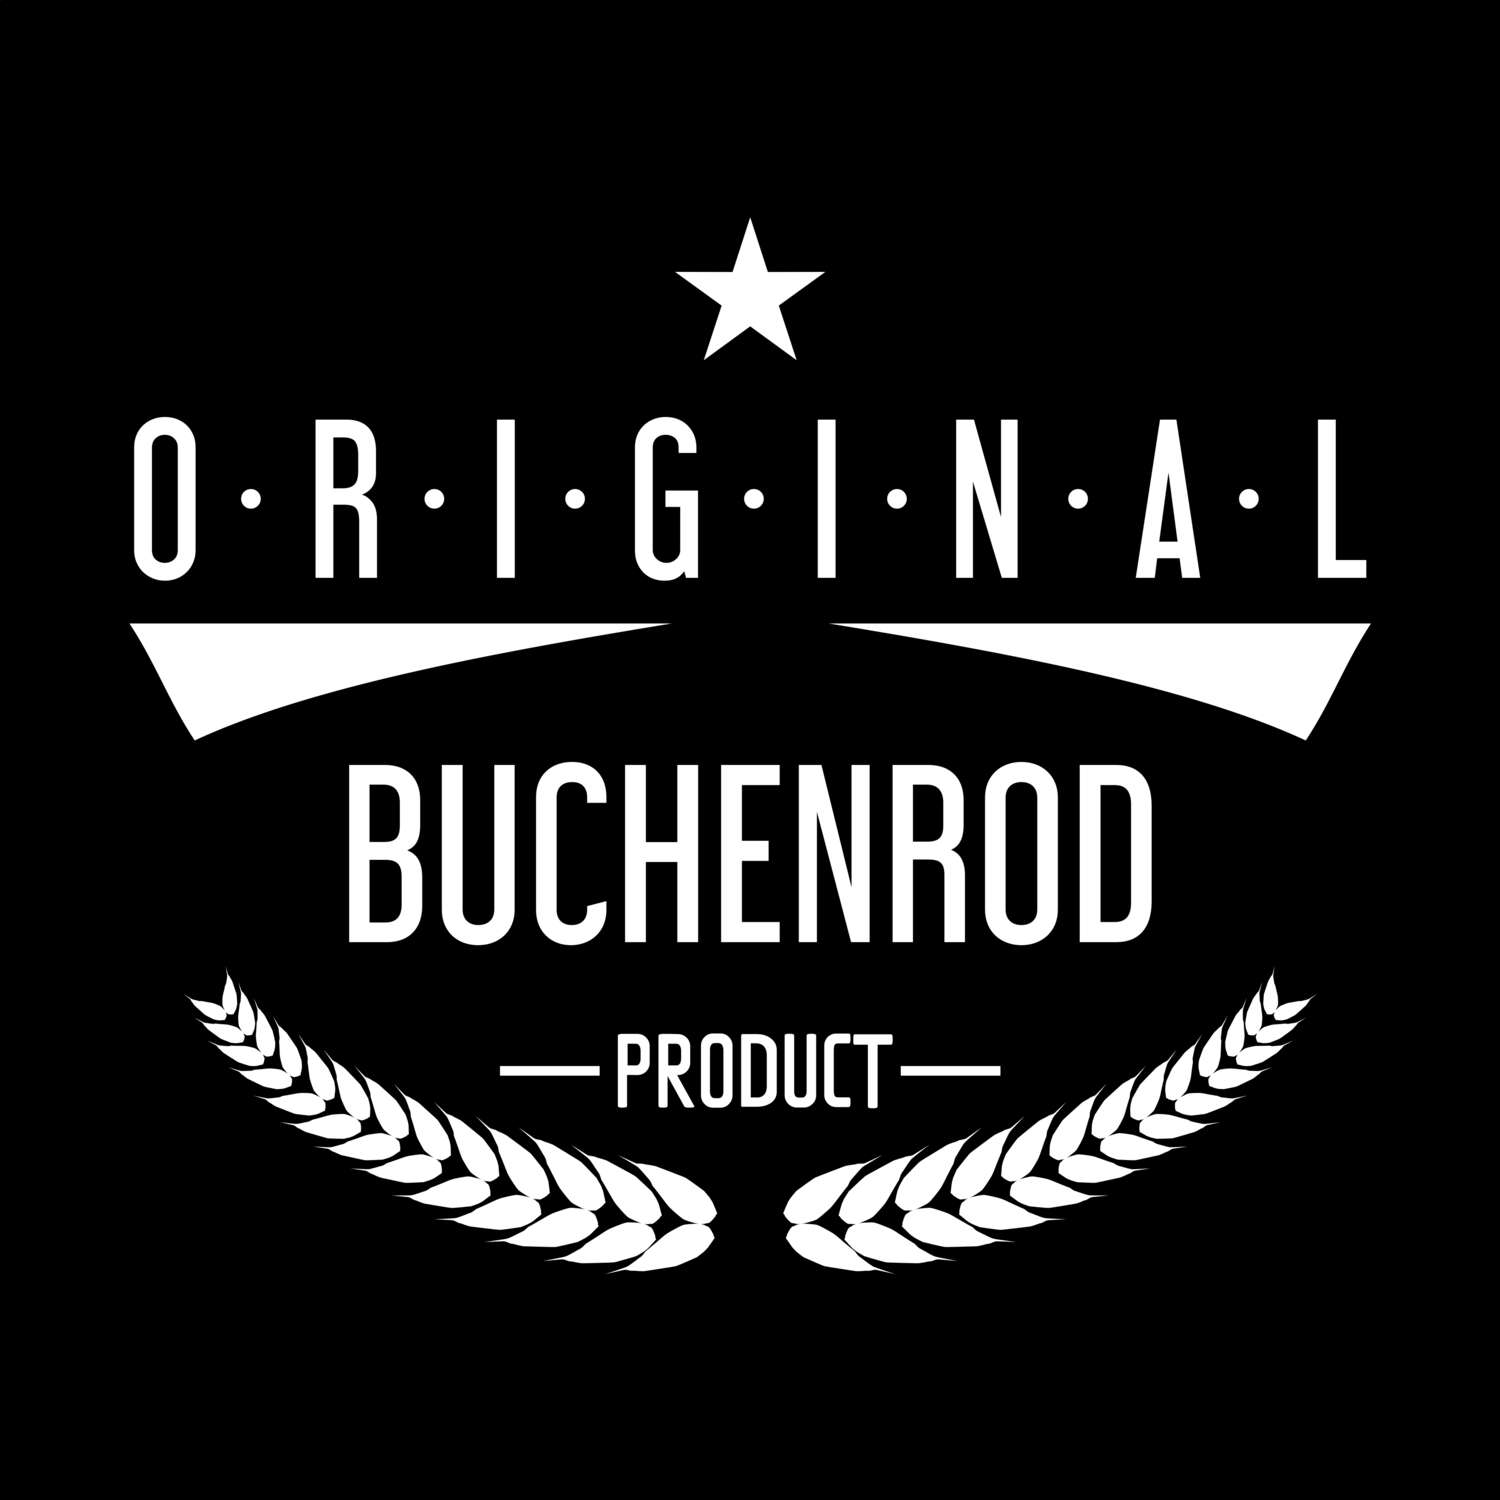 Buchenrod T-Shirt »Original Product«